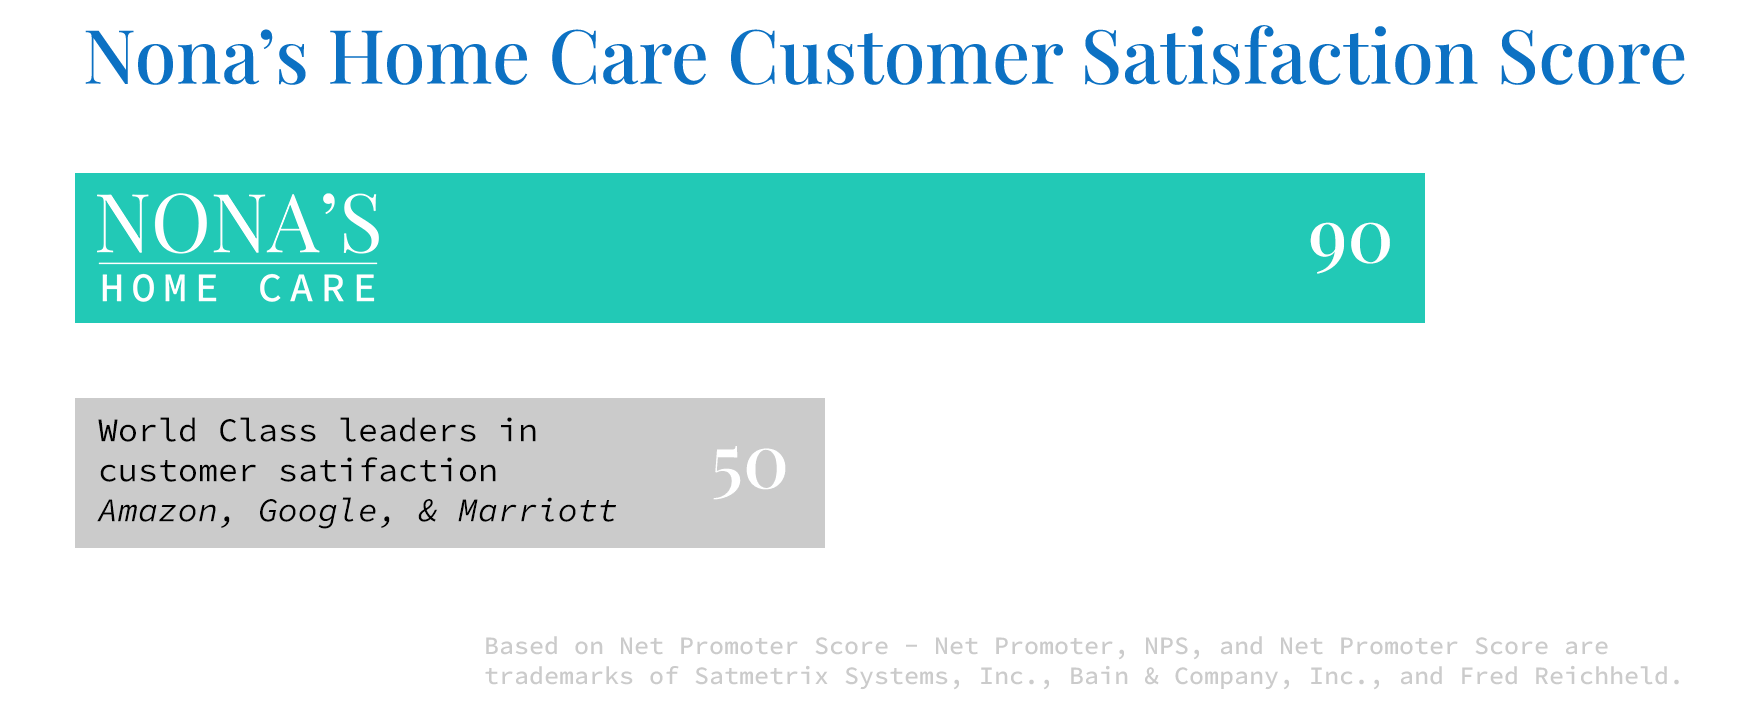 Nona's Home Care Customer Satisfaction Score